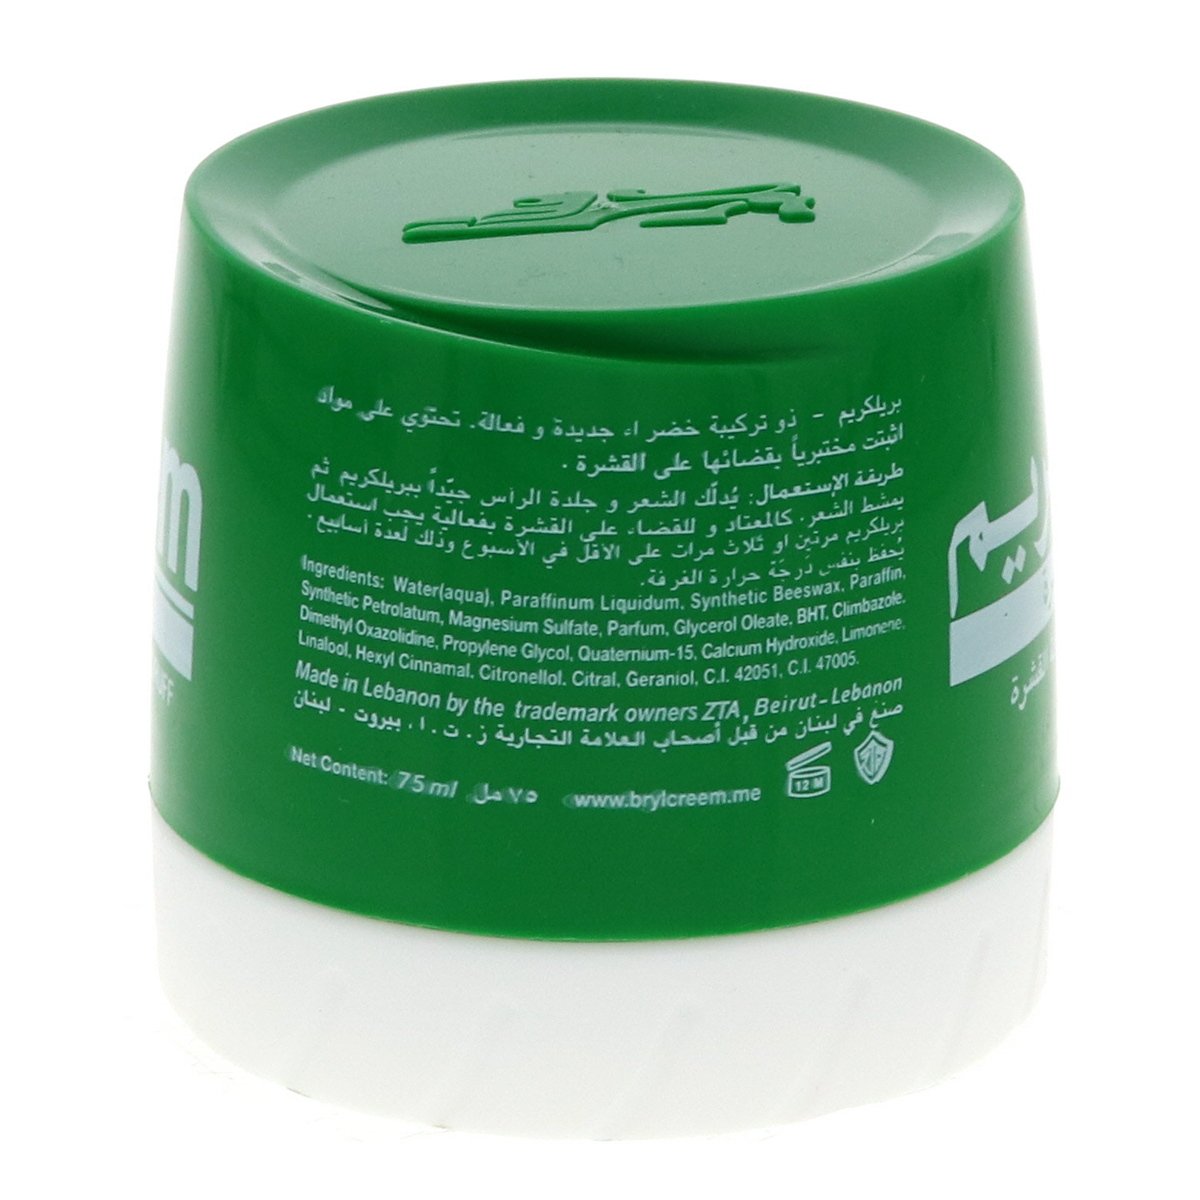 Brylcreem Anti-Dandruff Hair Cream, 75 ml